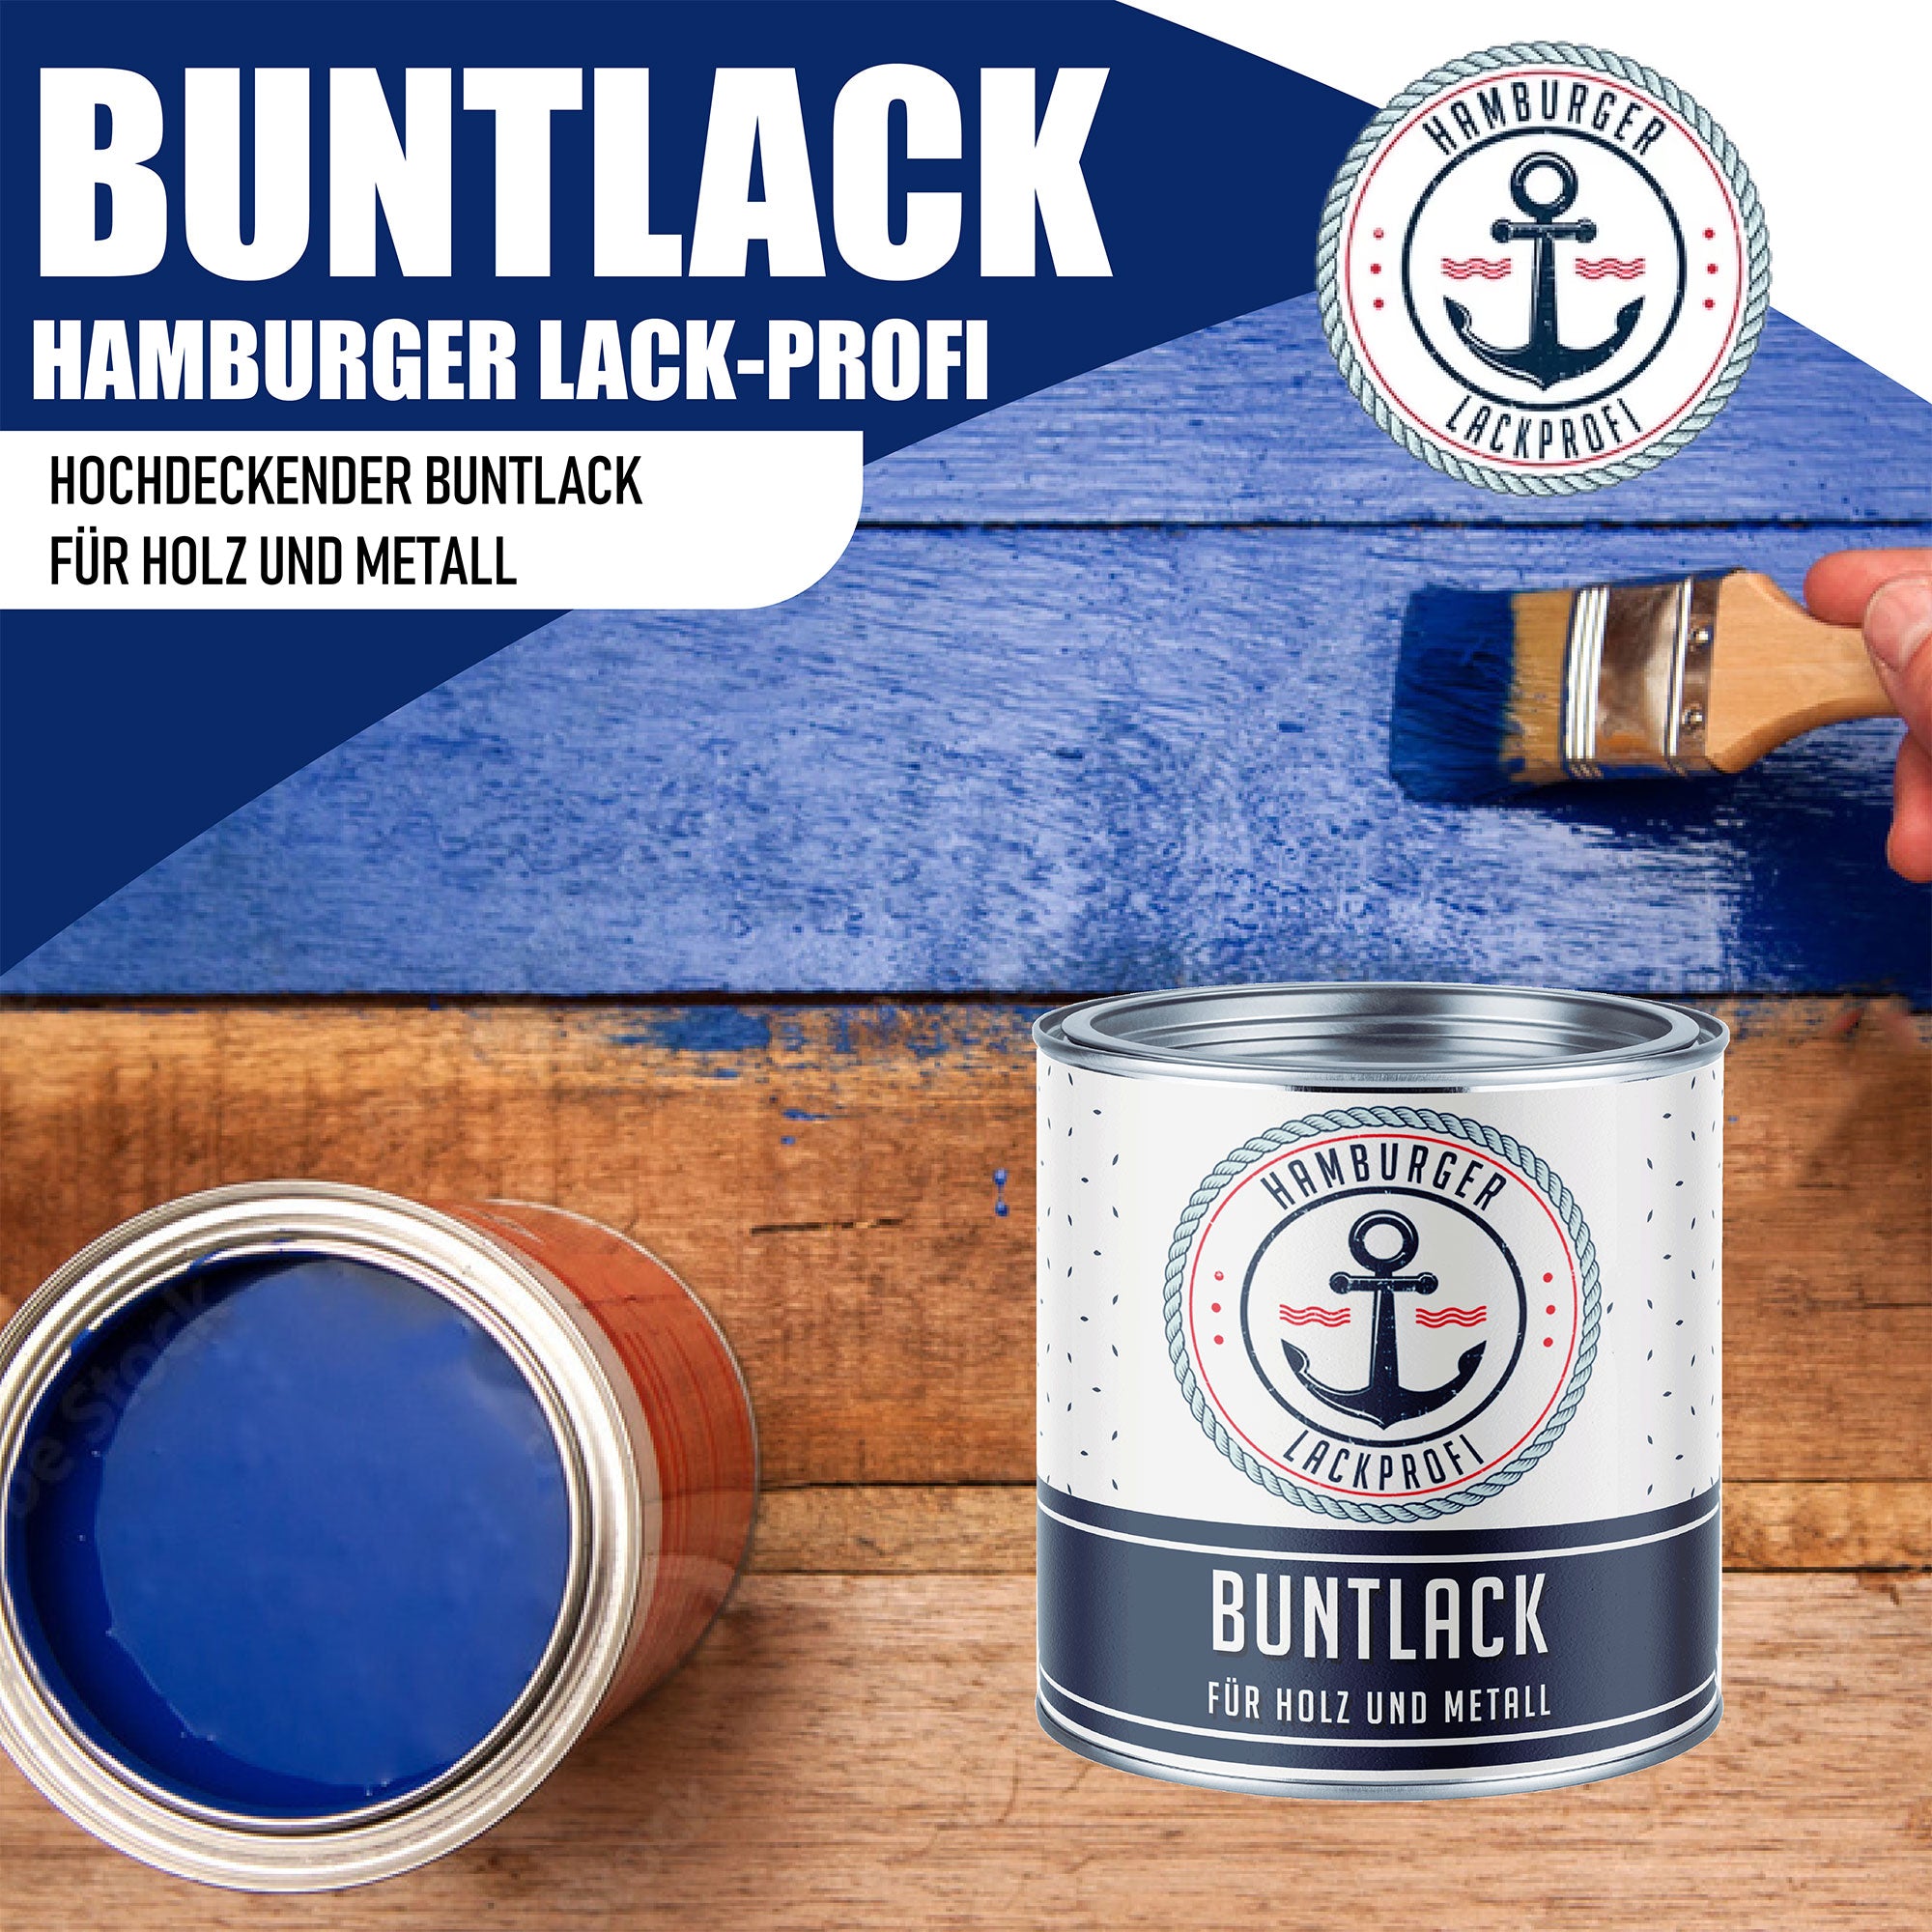 Hamburger Lack-Profi Buntlack Orangebraun RAL 8023 - Robuster Kunstharzlack